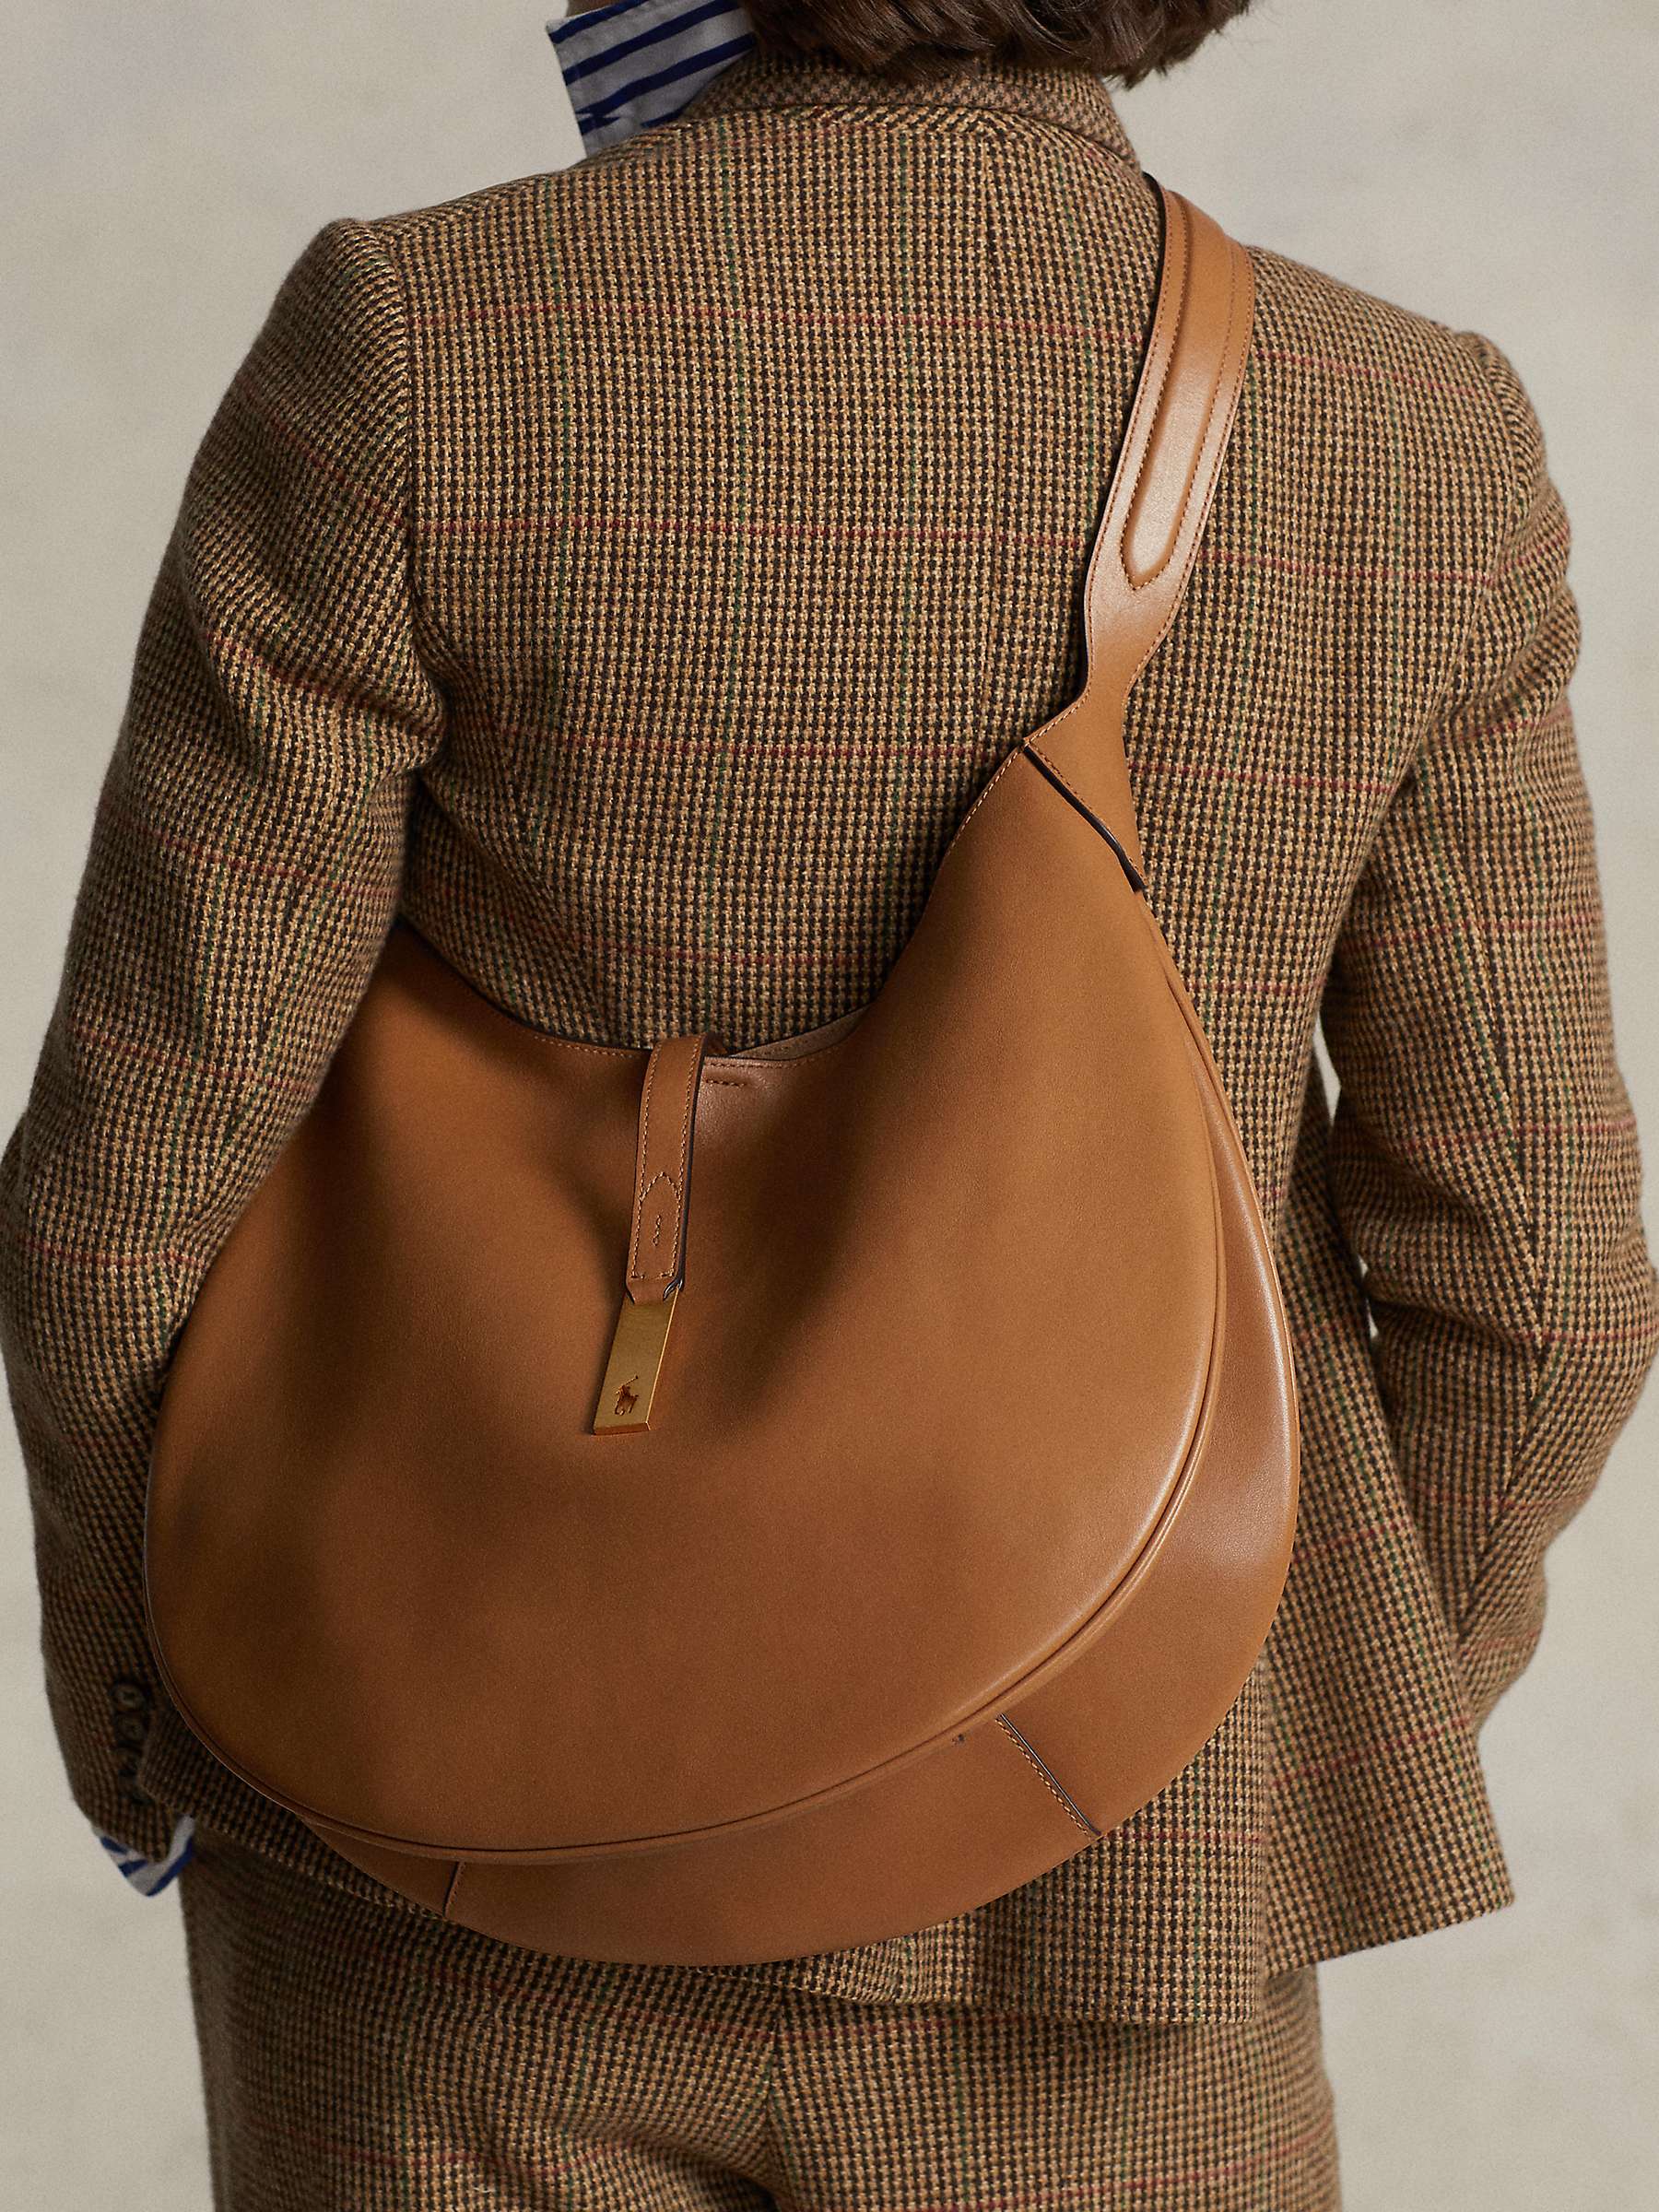 Buy Polo Ralph Lauren ID Leather Shoulder Bag, Tan Online at johnlewis.com